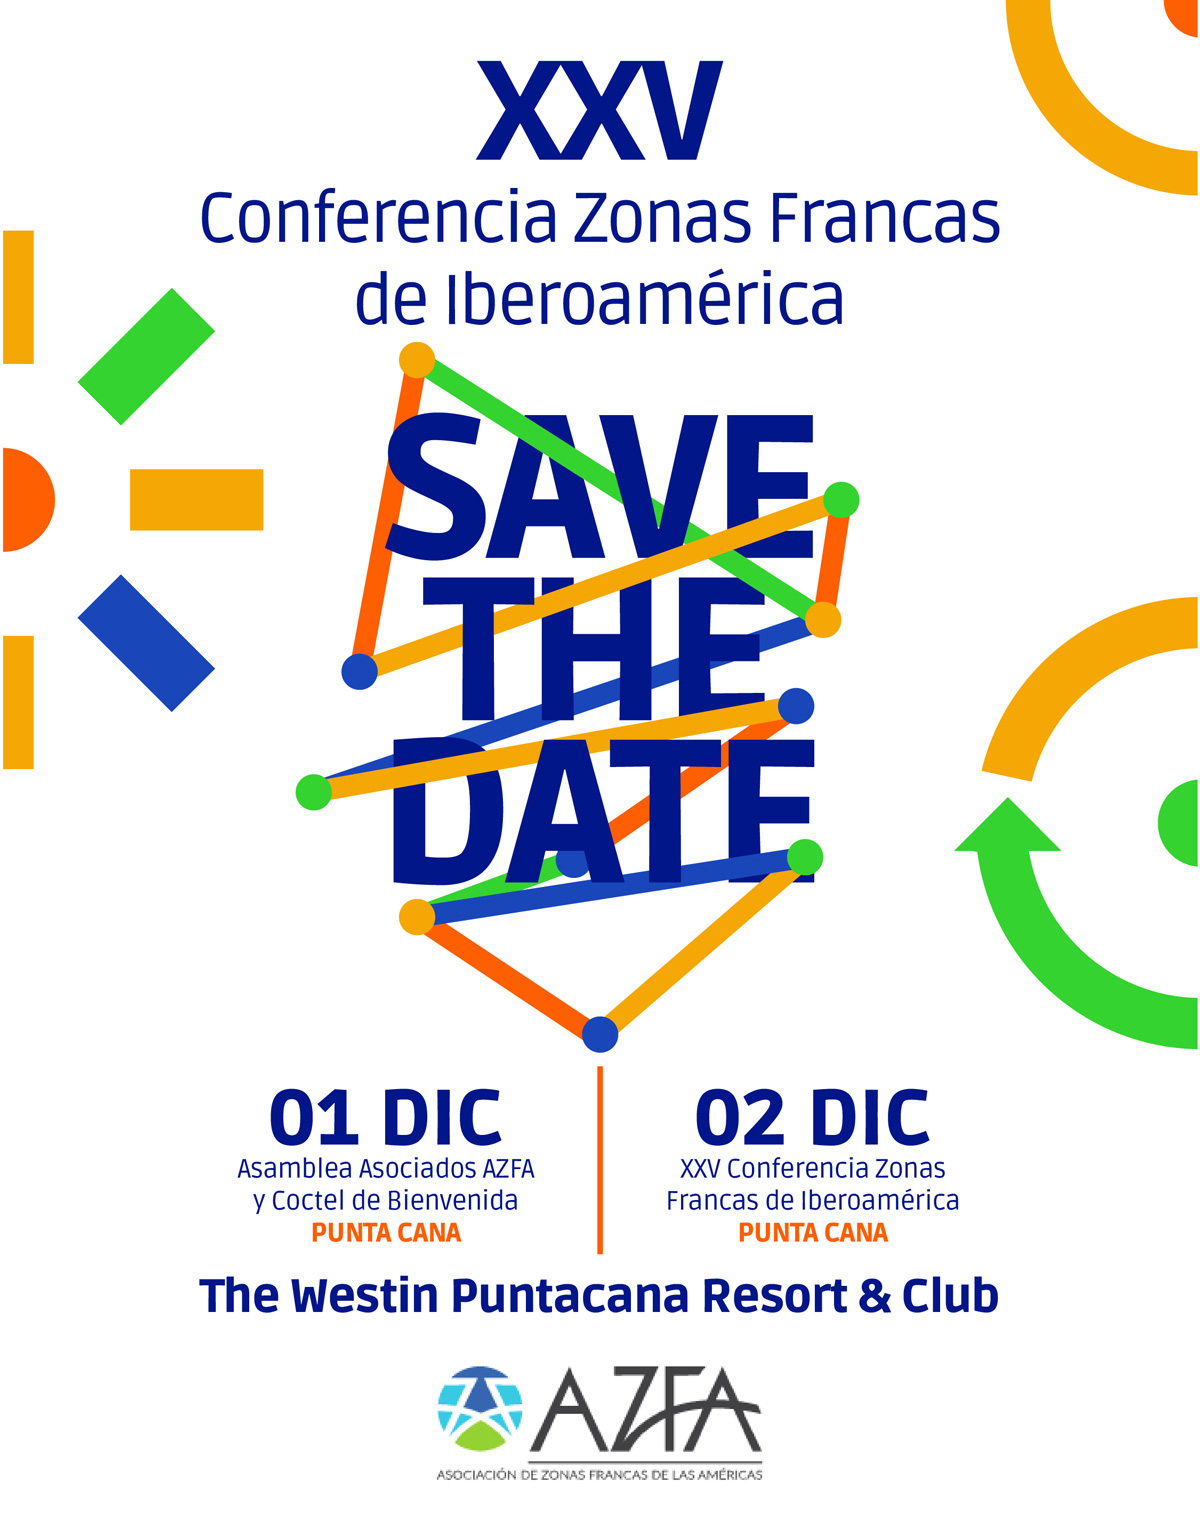 Save the Date - XXV Conferencia Zonas Francas de Iberoamérica